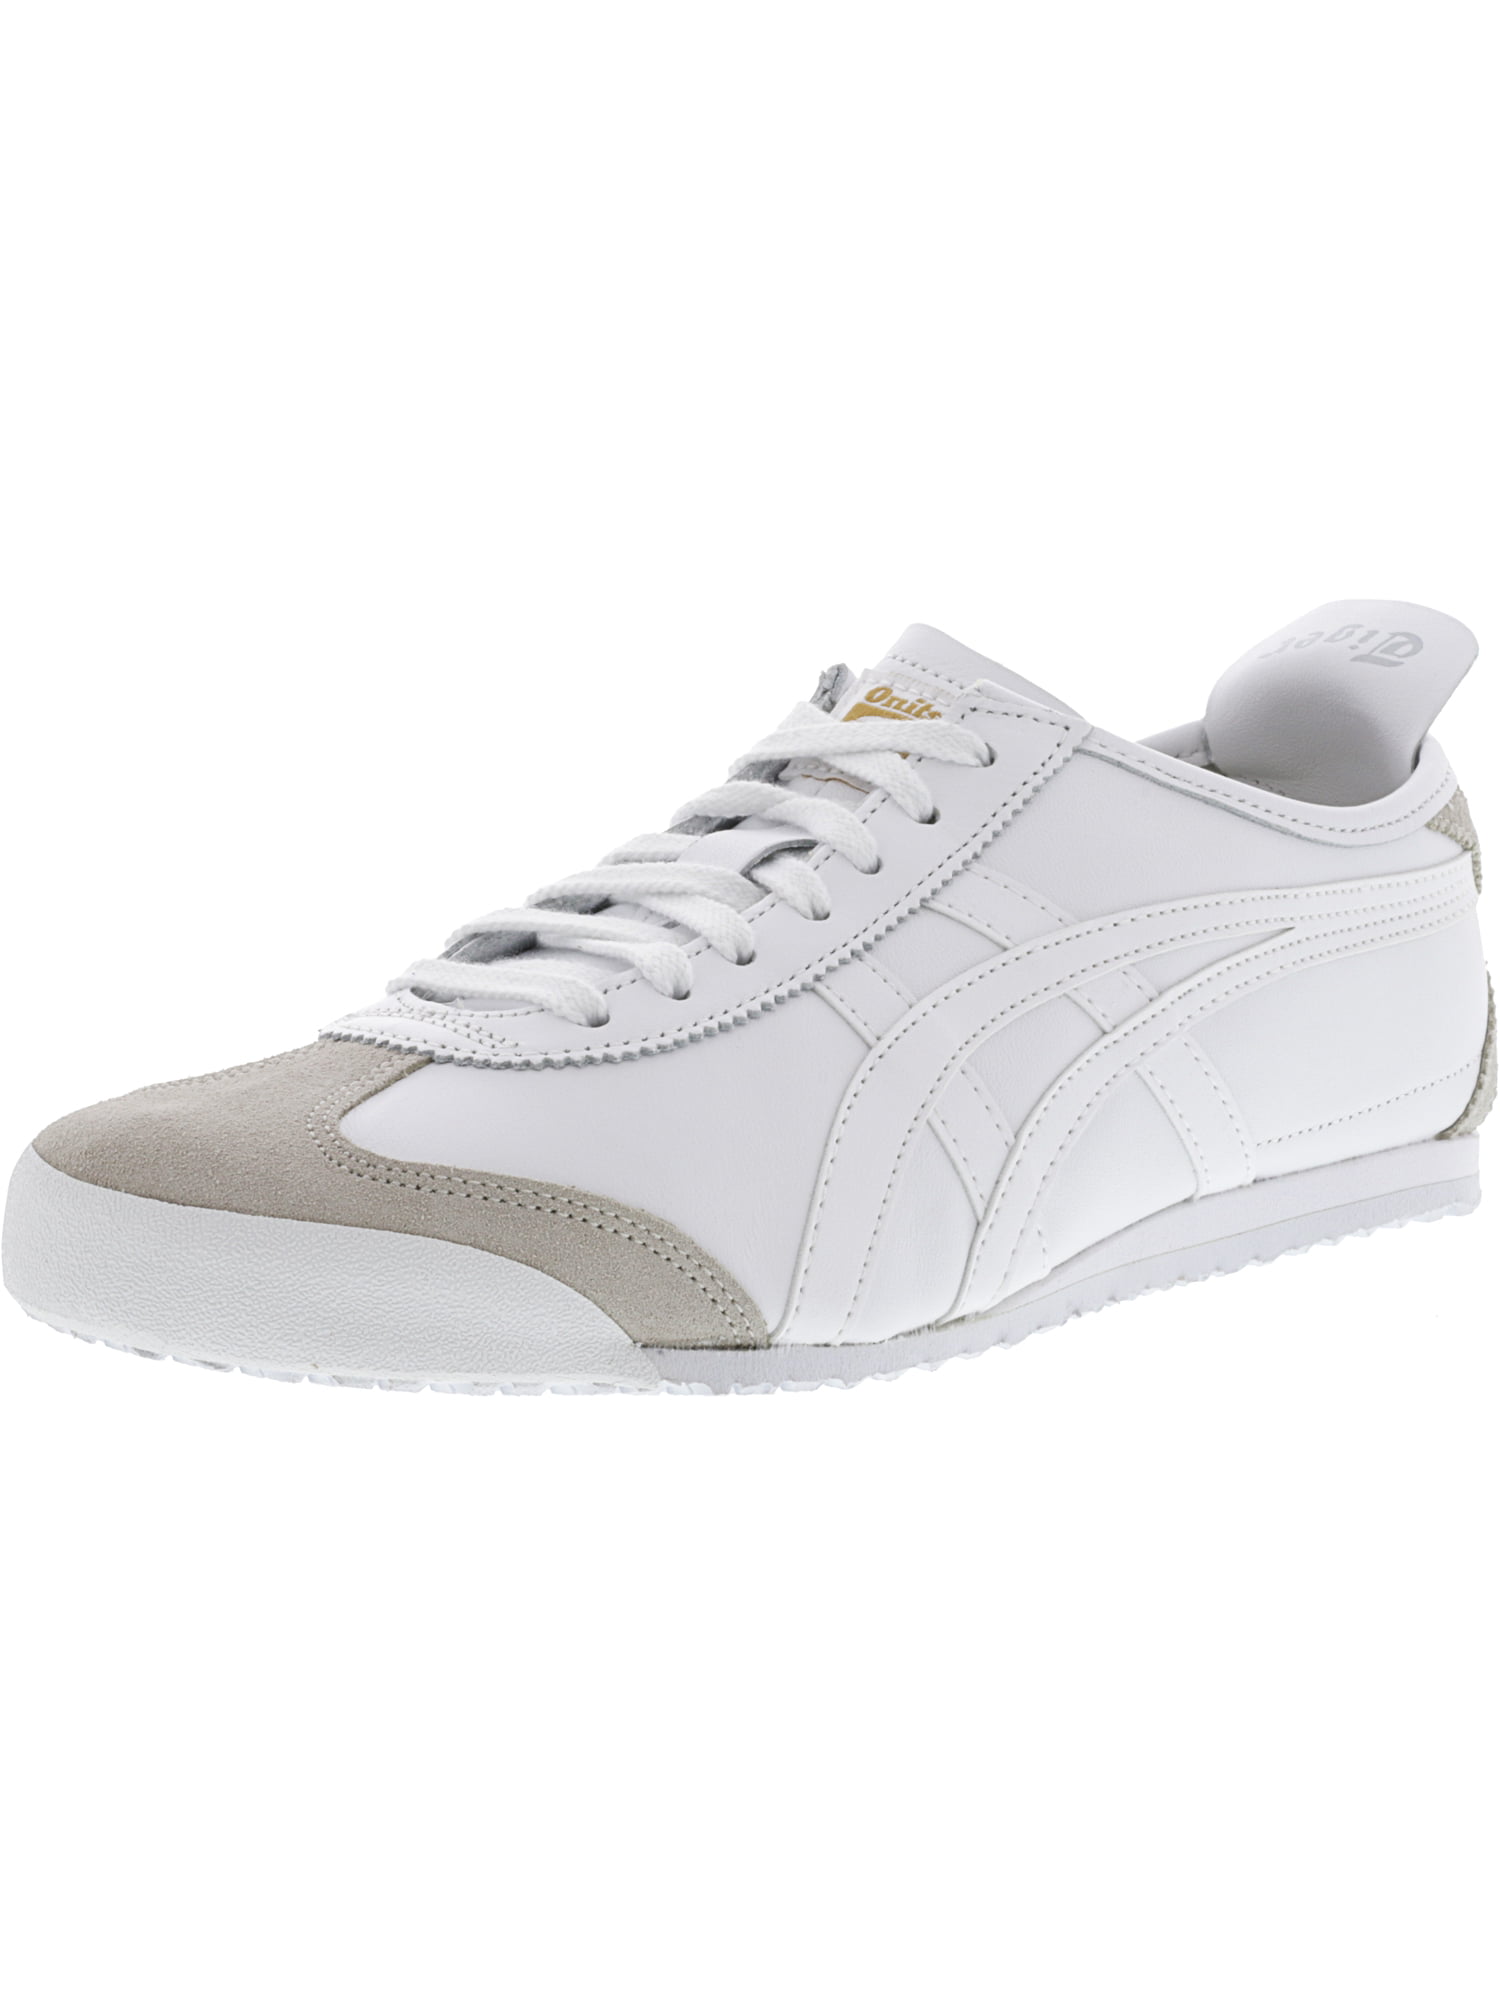 Onitsuka Mexico 66 White / Ankle-High Leather Fashion Sneaker - 11.5M 10.5M - Walmart.com